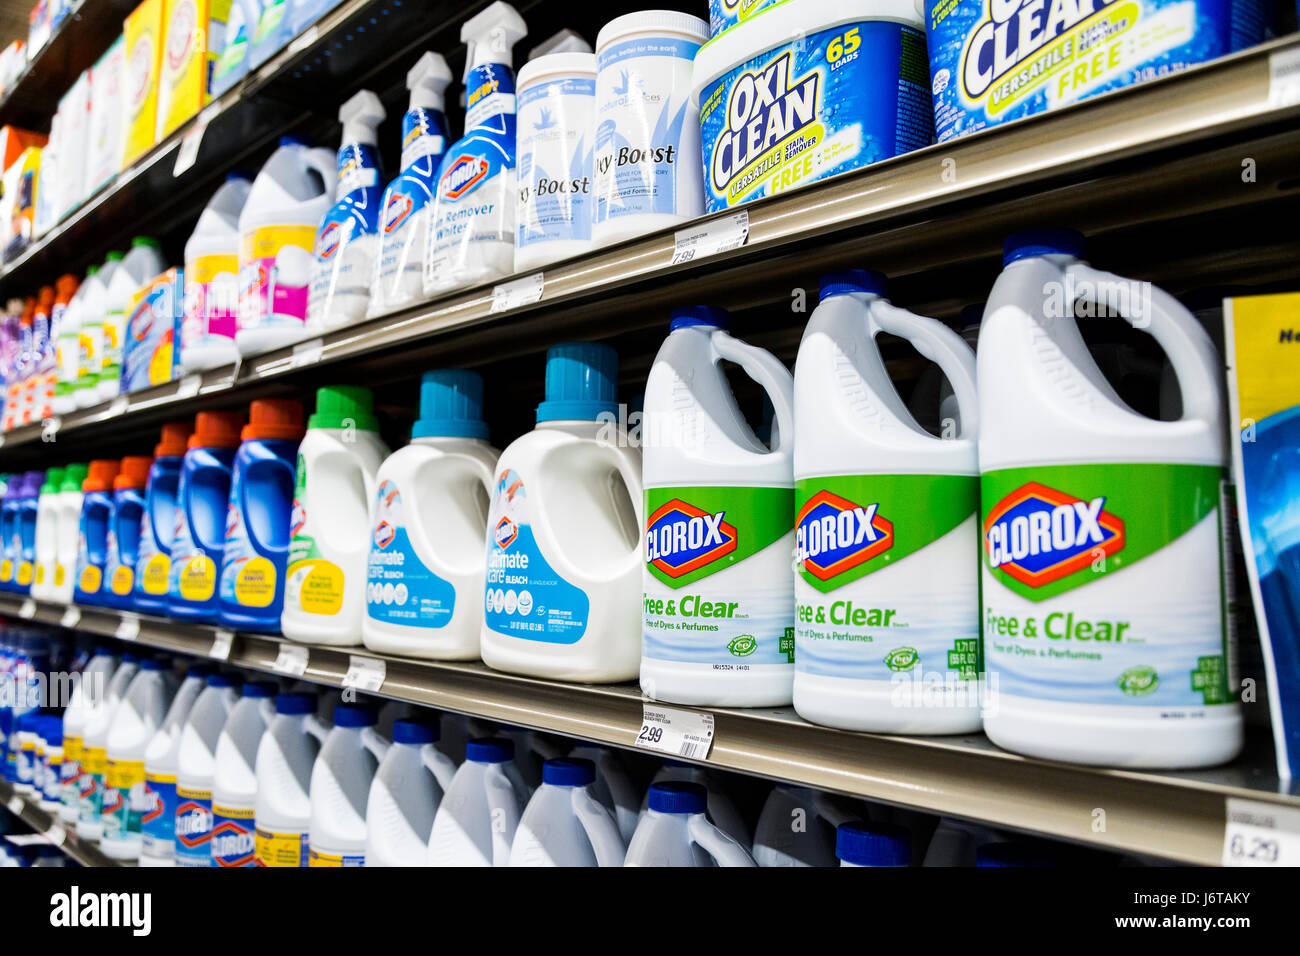 Rows of Clorox brand liquid bleach on a grocery store shelf Stock Photo